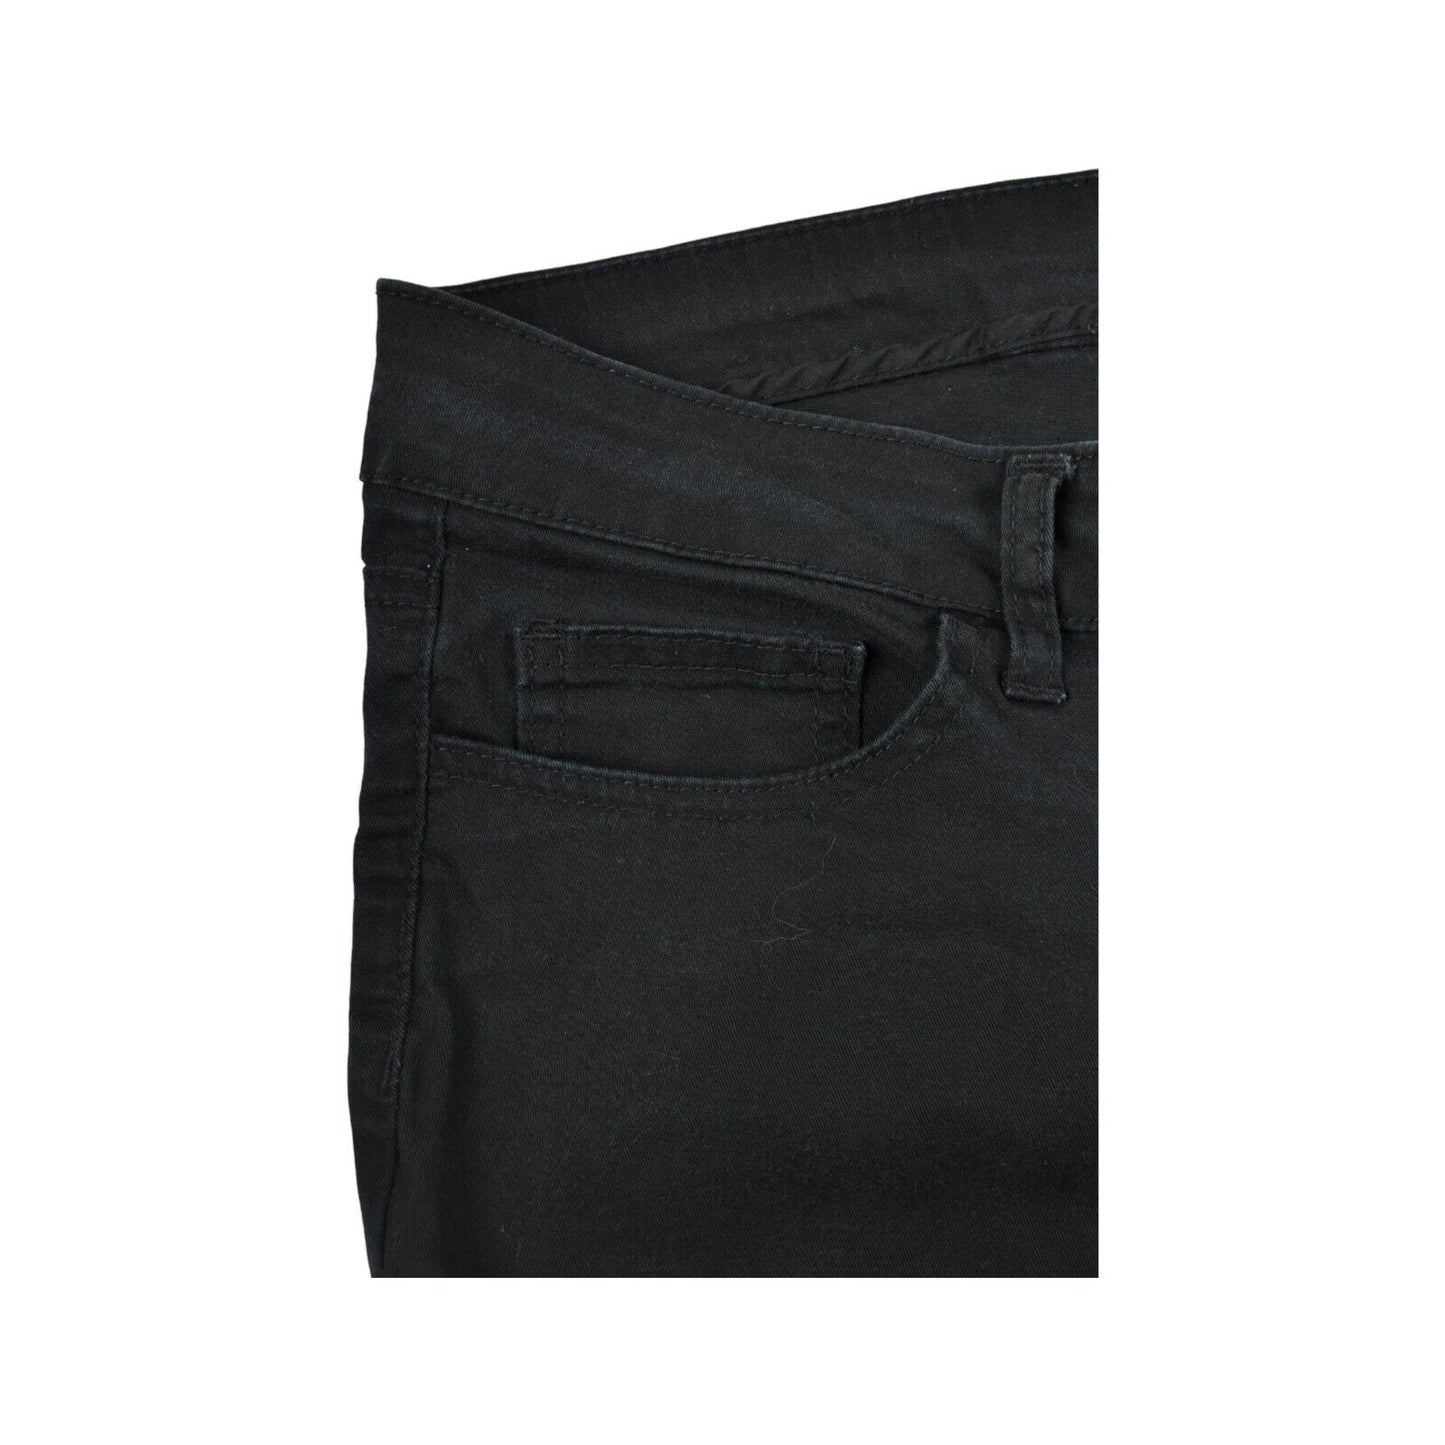 Vintage Dickies Workwear Trouser Boot Cut Black W36/L30